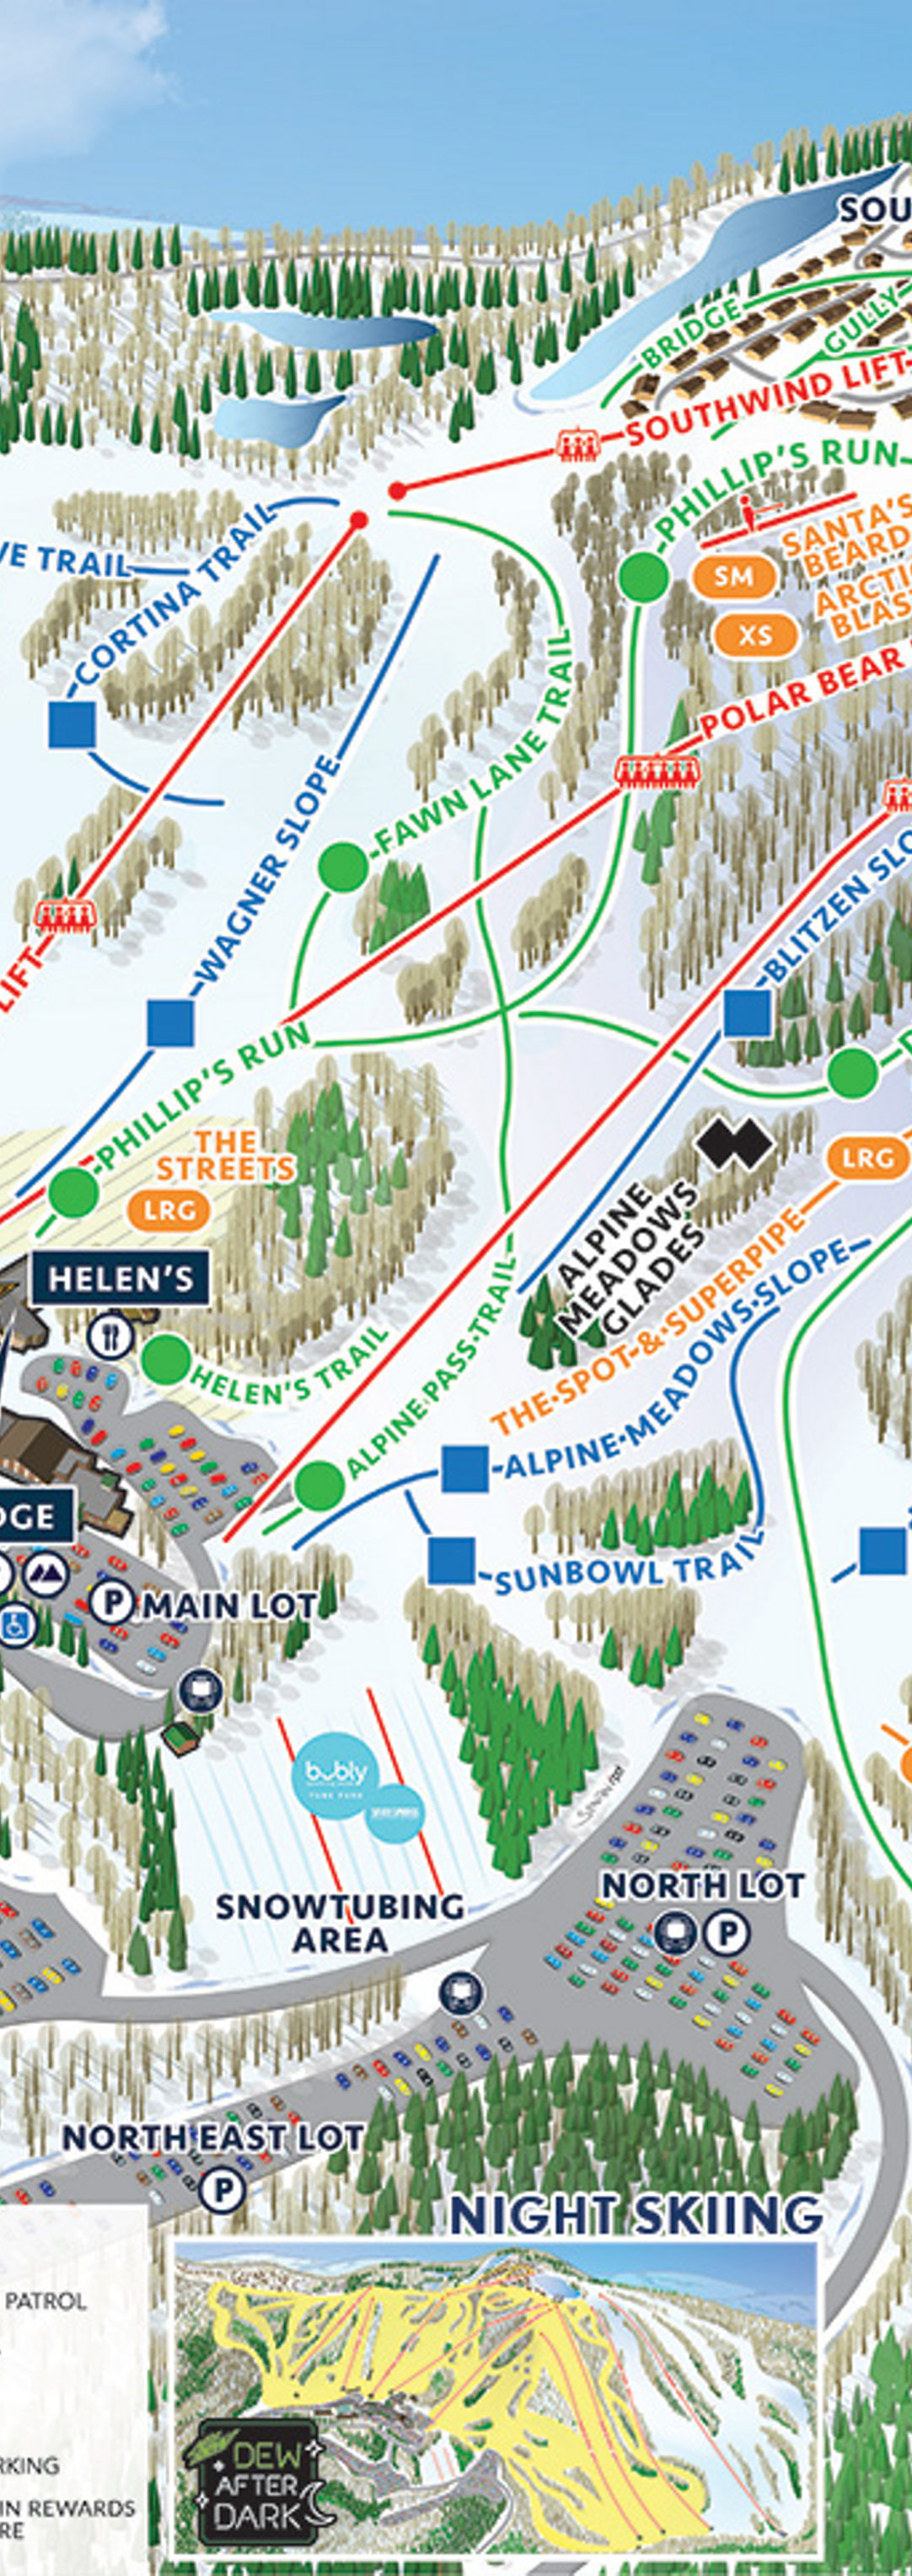 Keystone Mountain Interactive Map